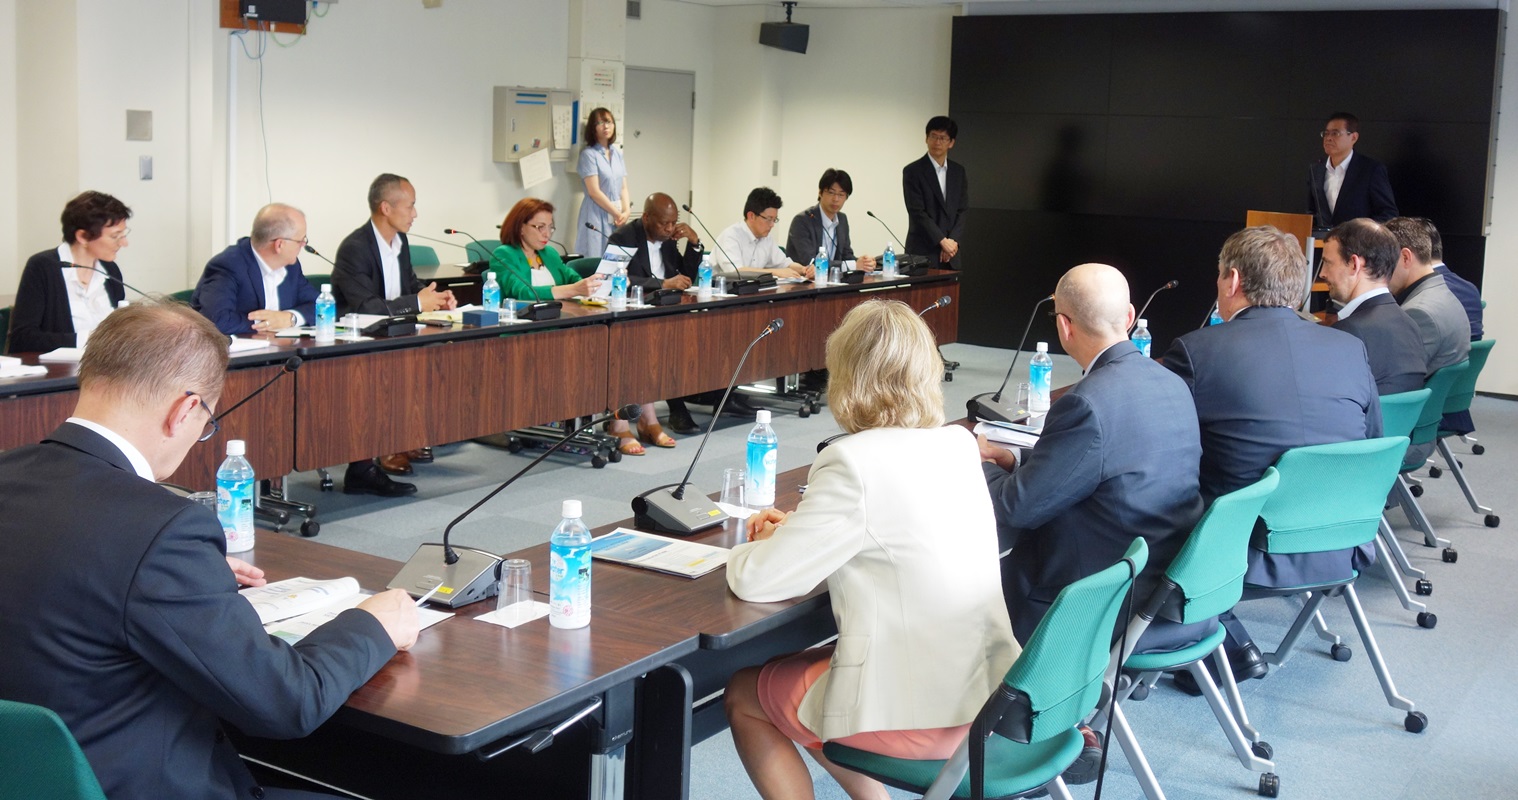 Hajime Yoshimura responding on behalf of the delegation (2/2)